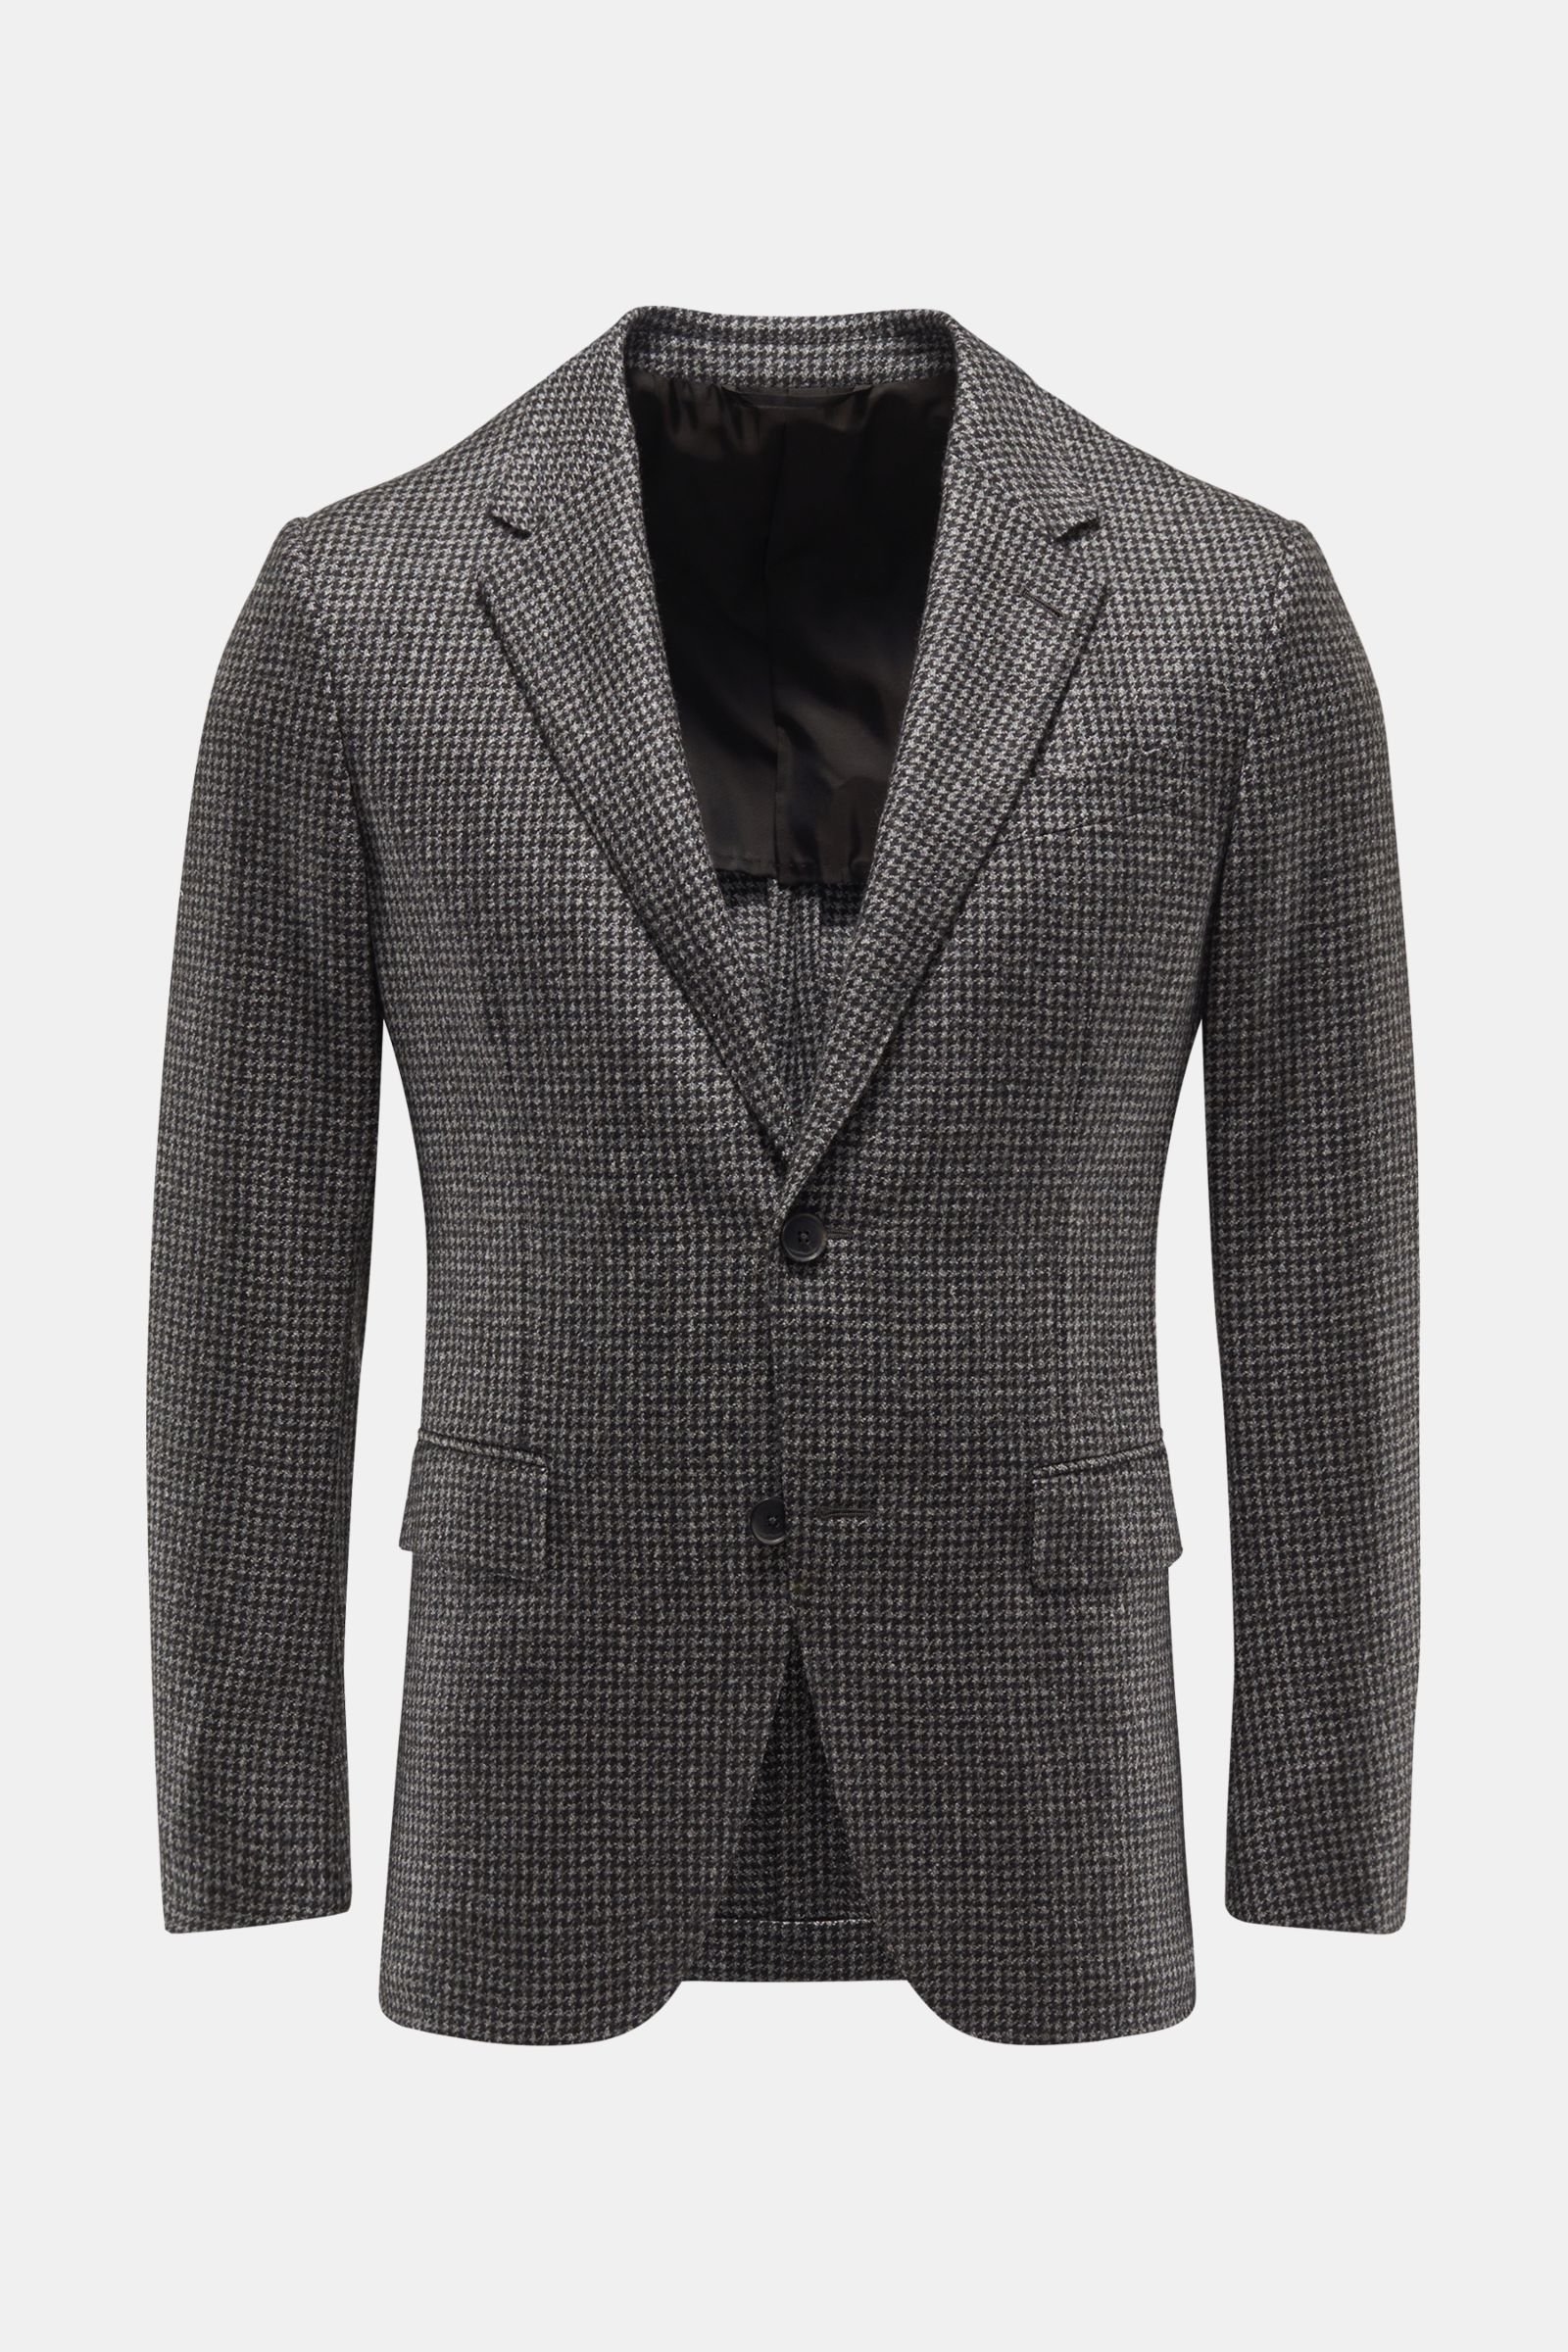 Cashmere smart-casual jacket dark grey checked 